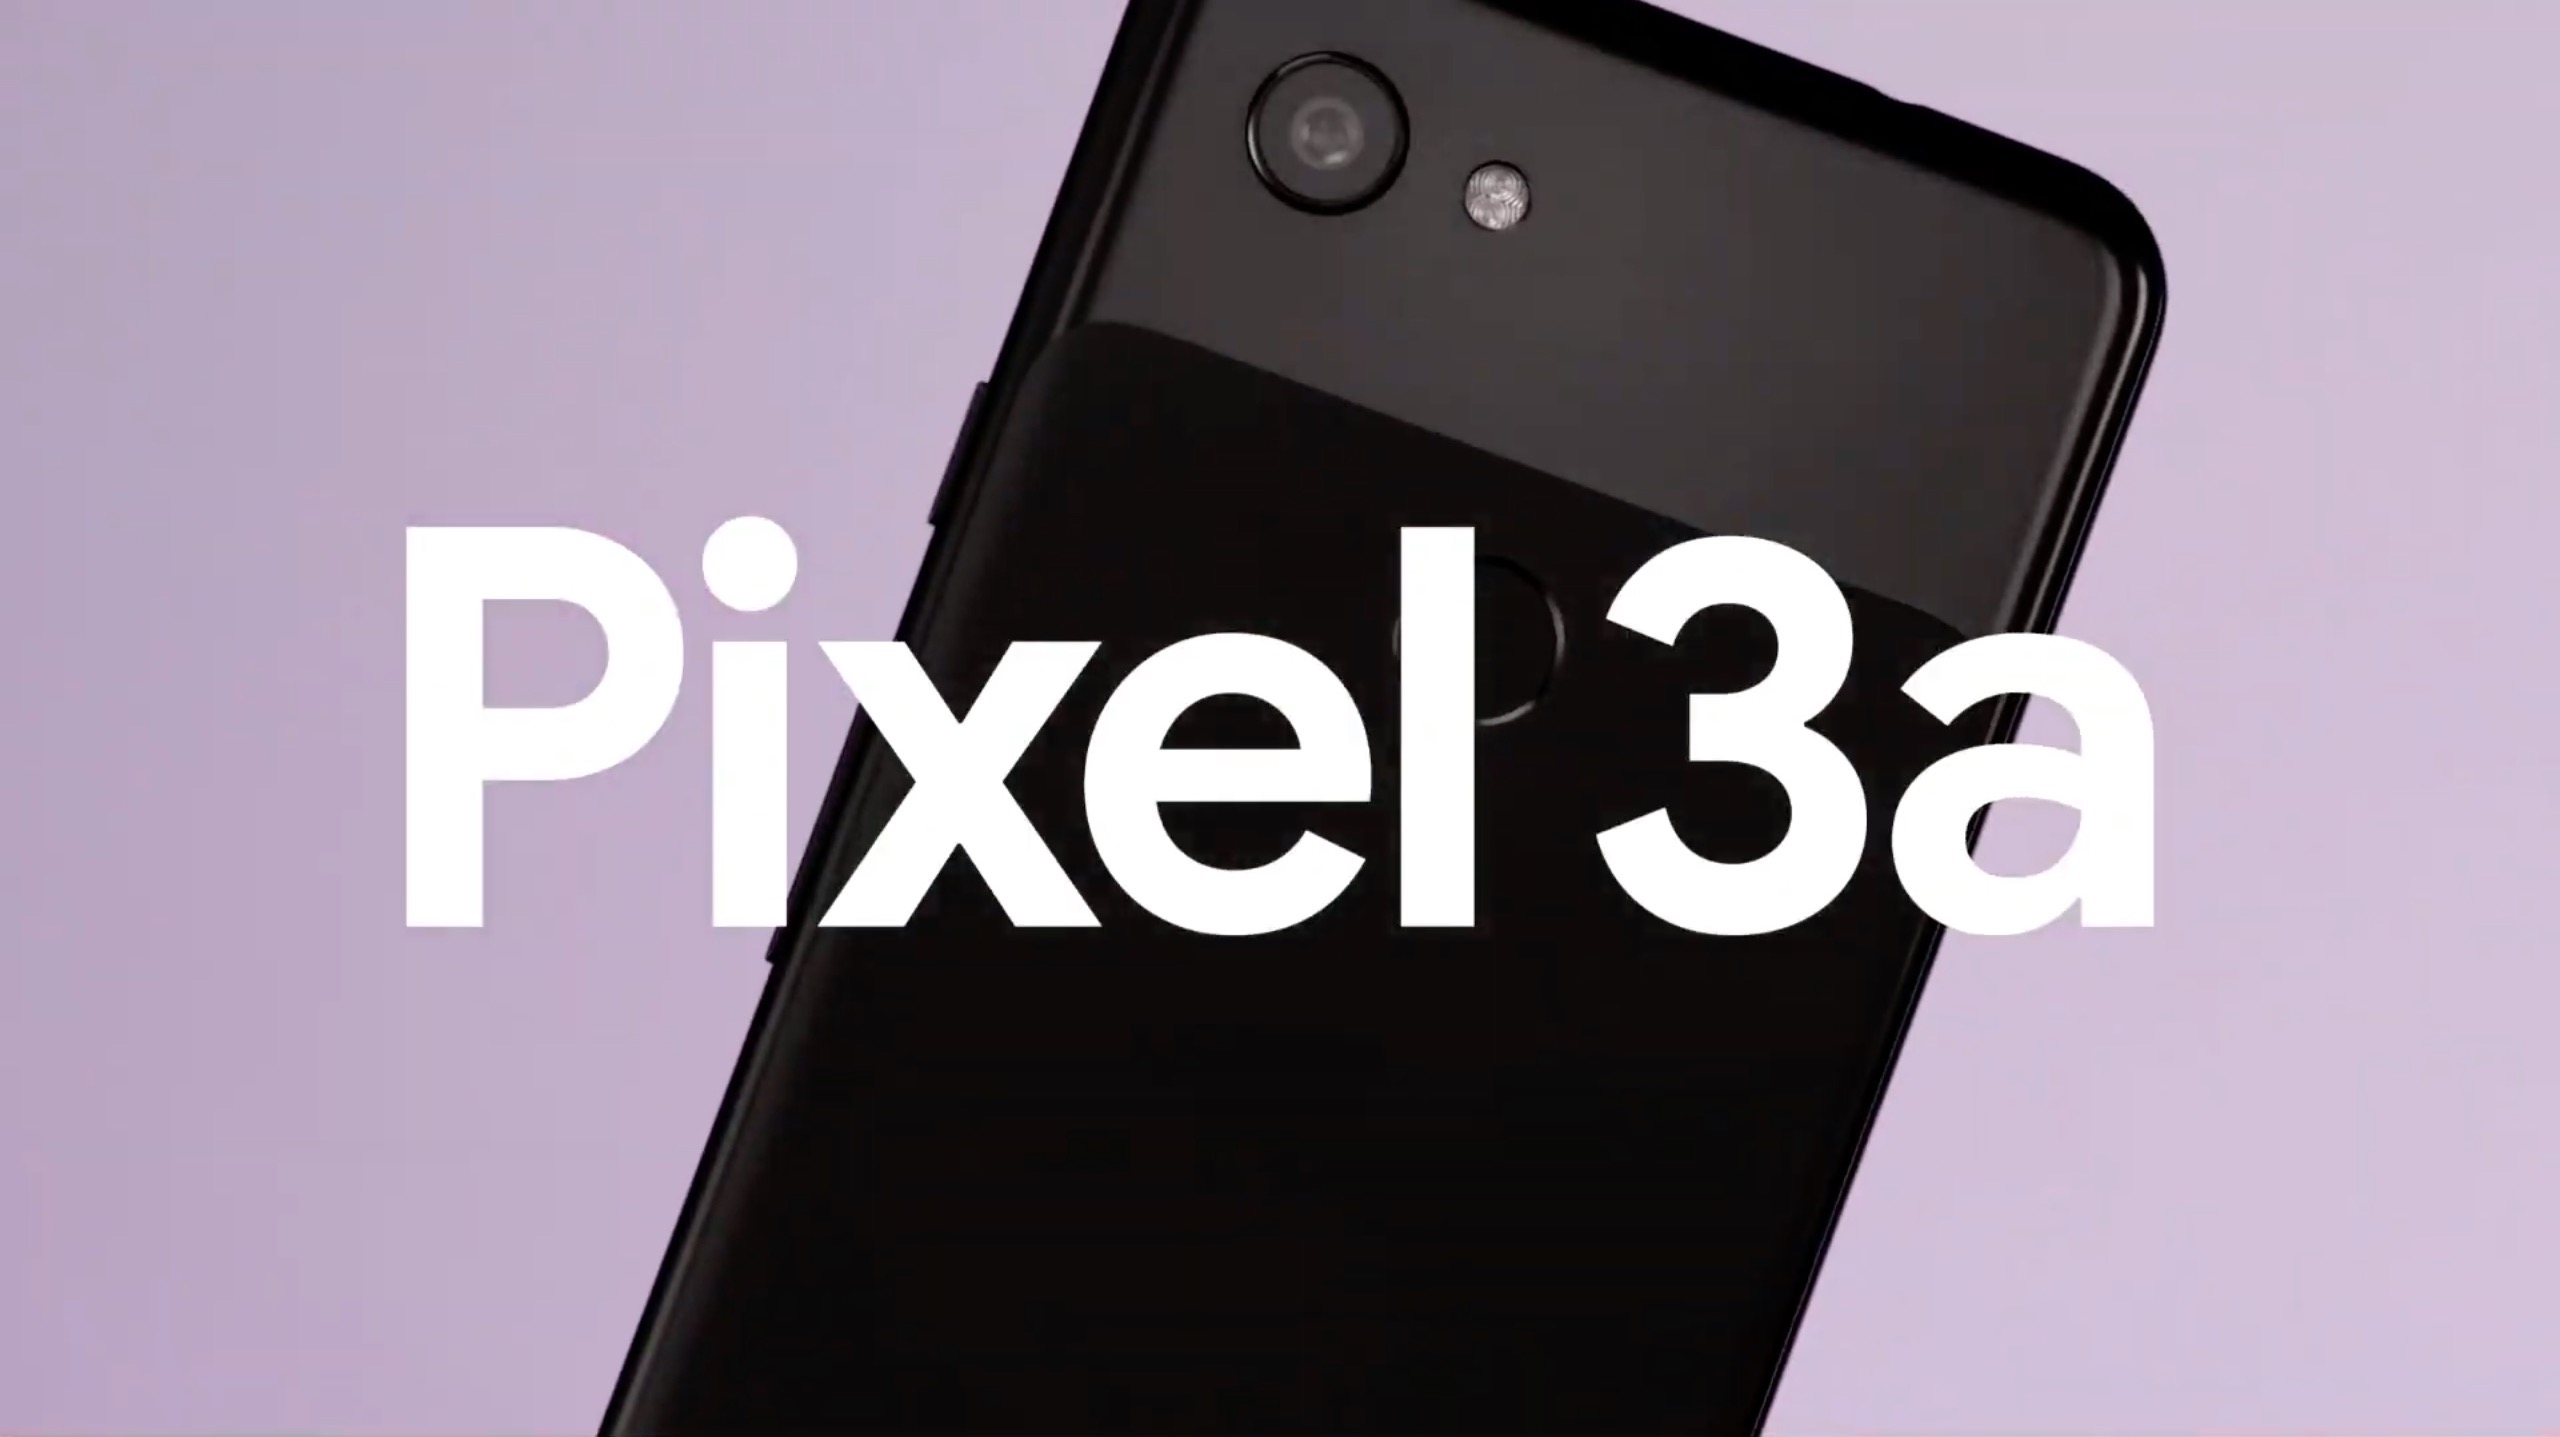 「Pixel 3a」と「Pixel 3a XL」の違いを比較